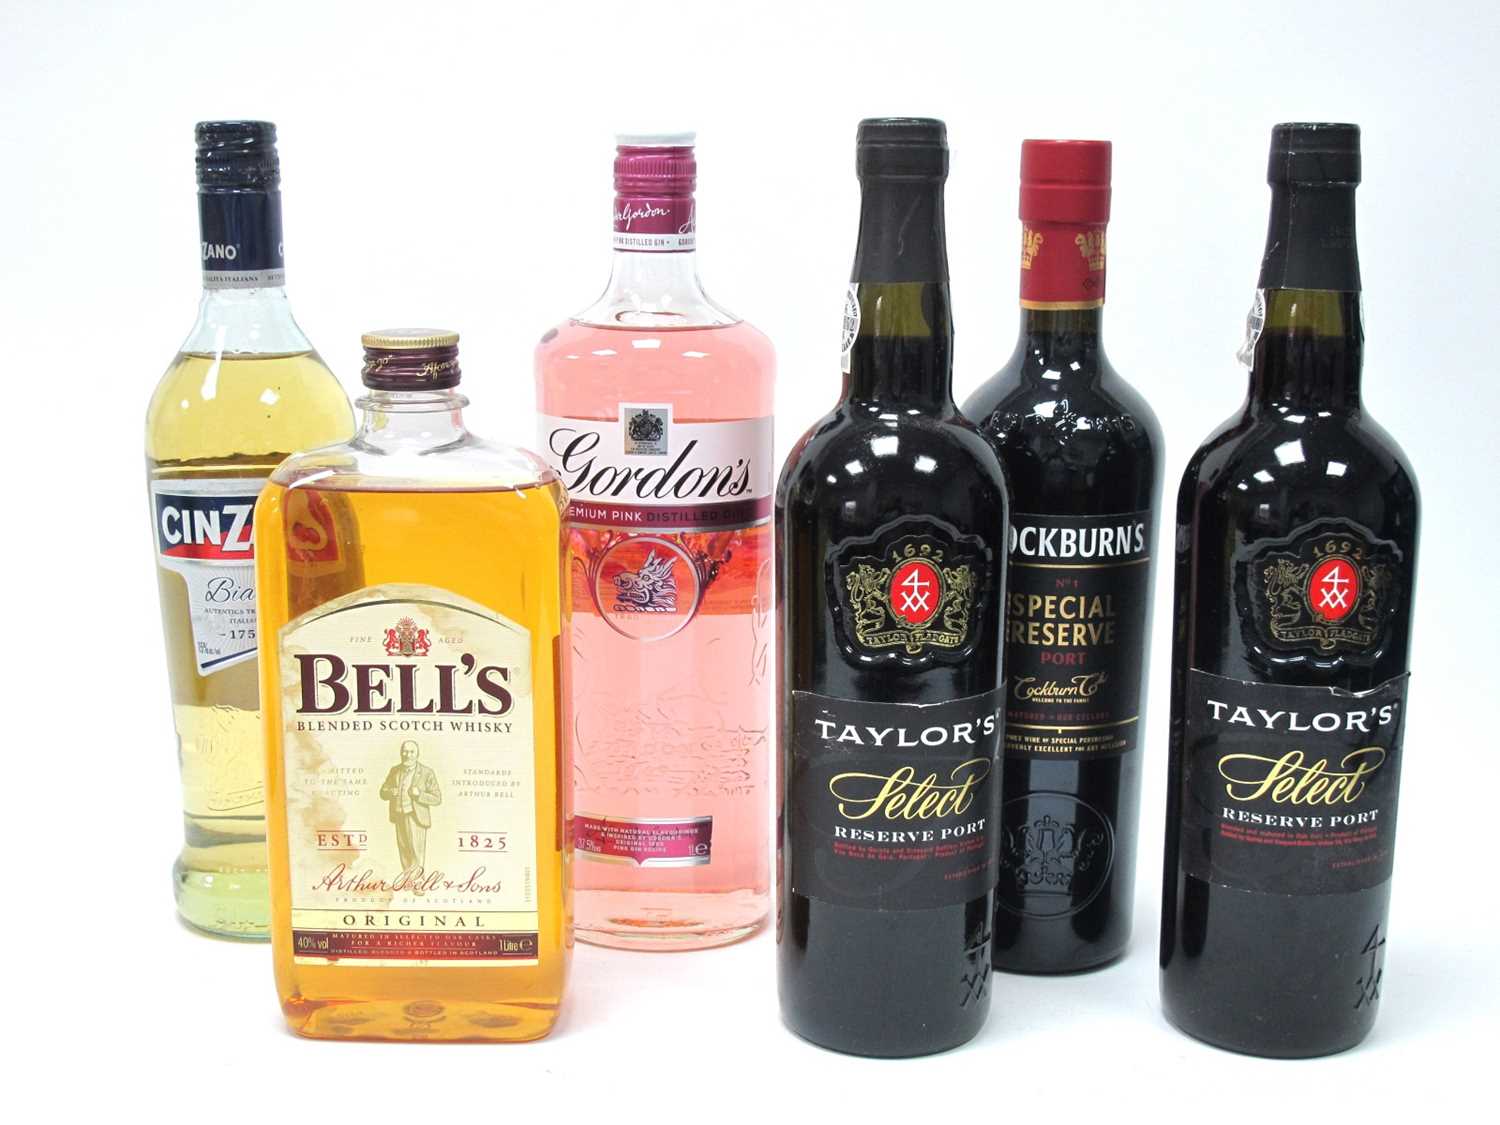 Spirits - Cockburn's & Taylors Reserve Ports, (3 bottles); Bell's Whisky, 1 litre; Gordon's Pink